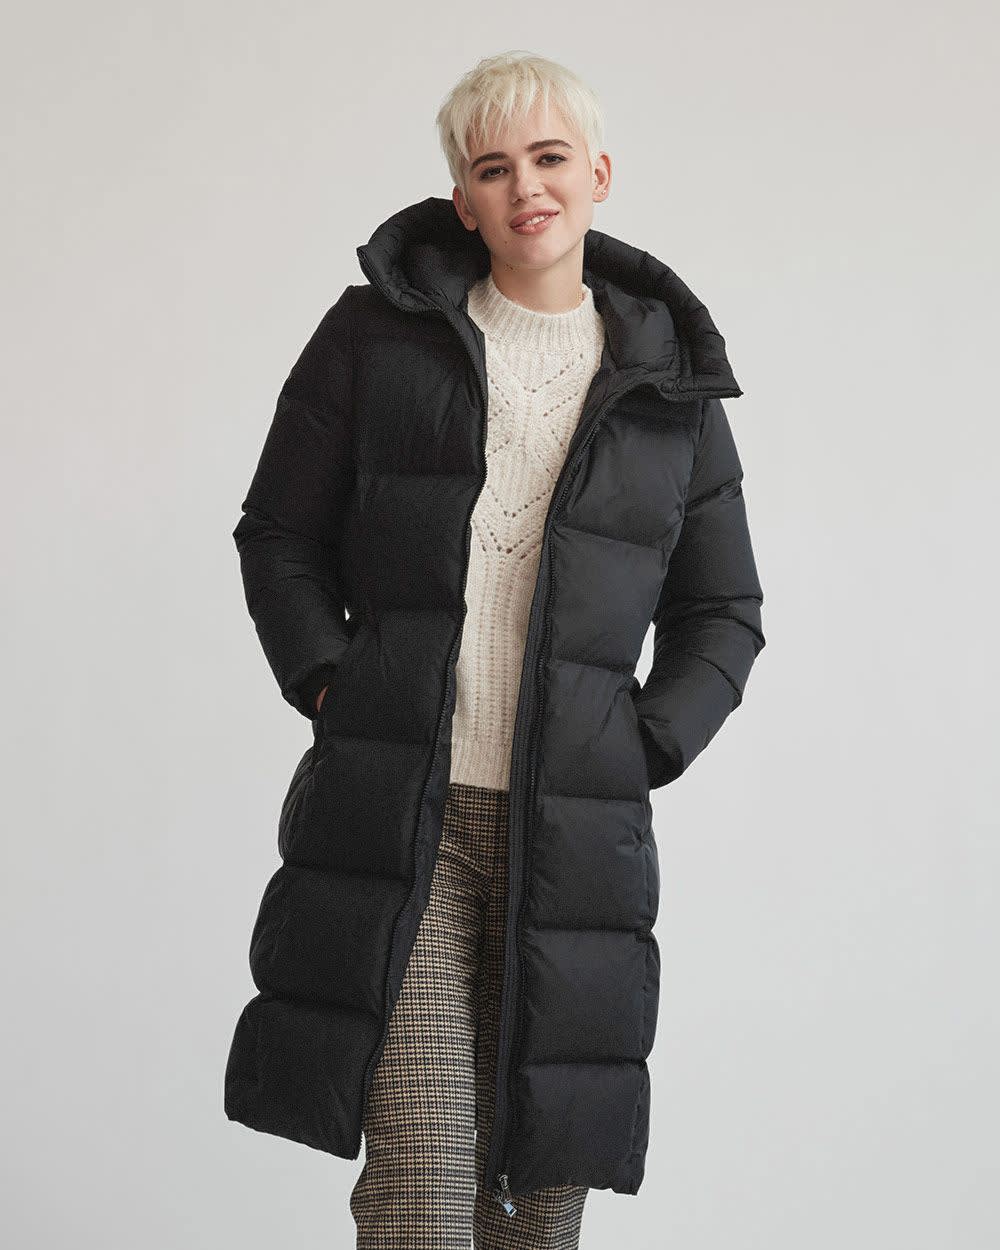 Dkny Women's Bibbed Hooded Lightweight Puffer Coat, Created for Macy's